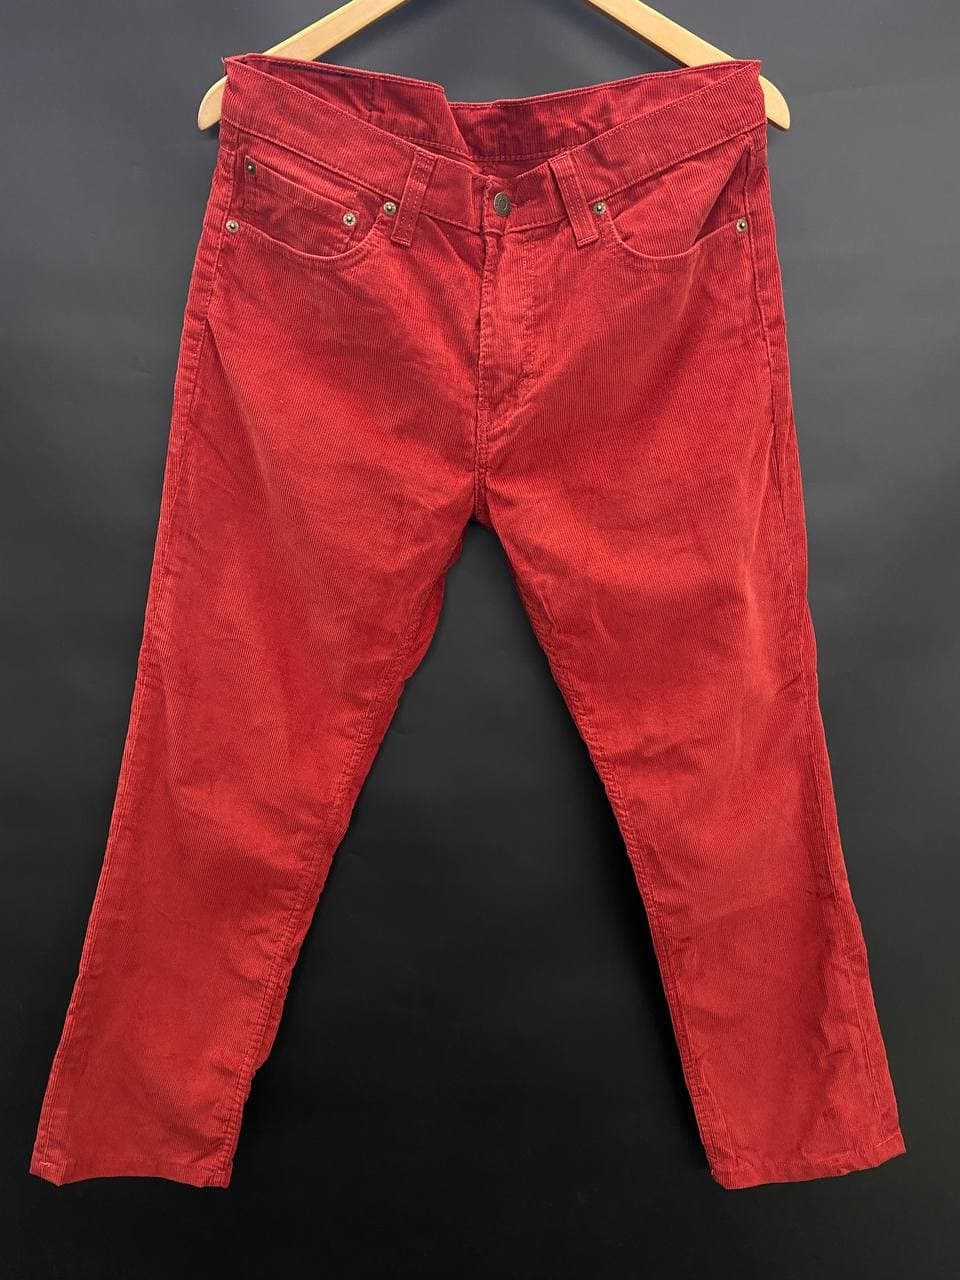 Levis vintage pants corduroy jeans red | Etsy